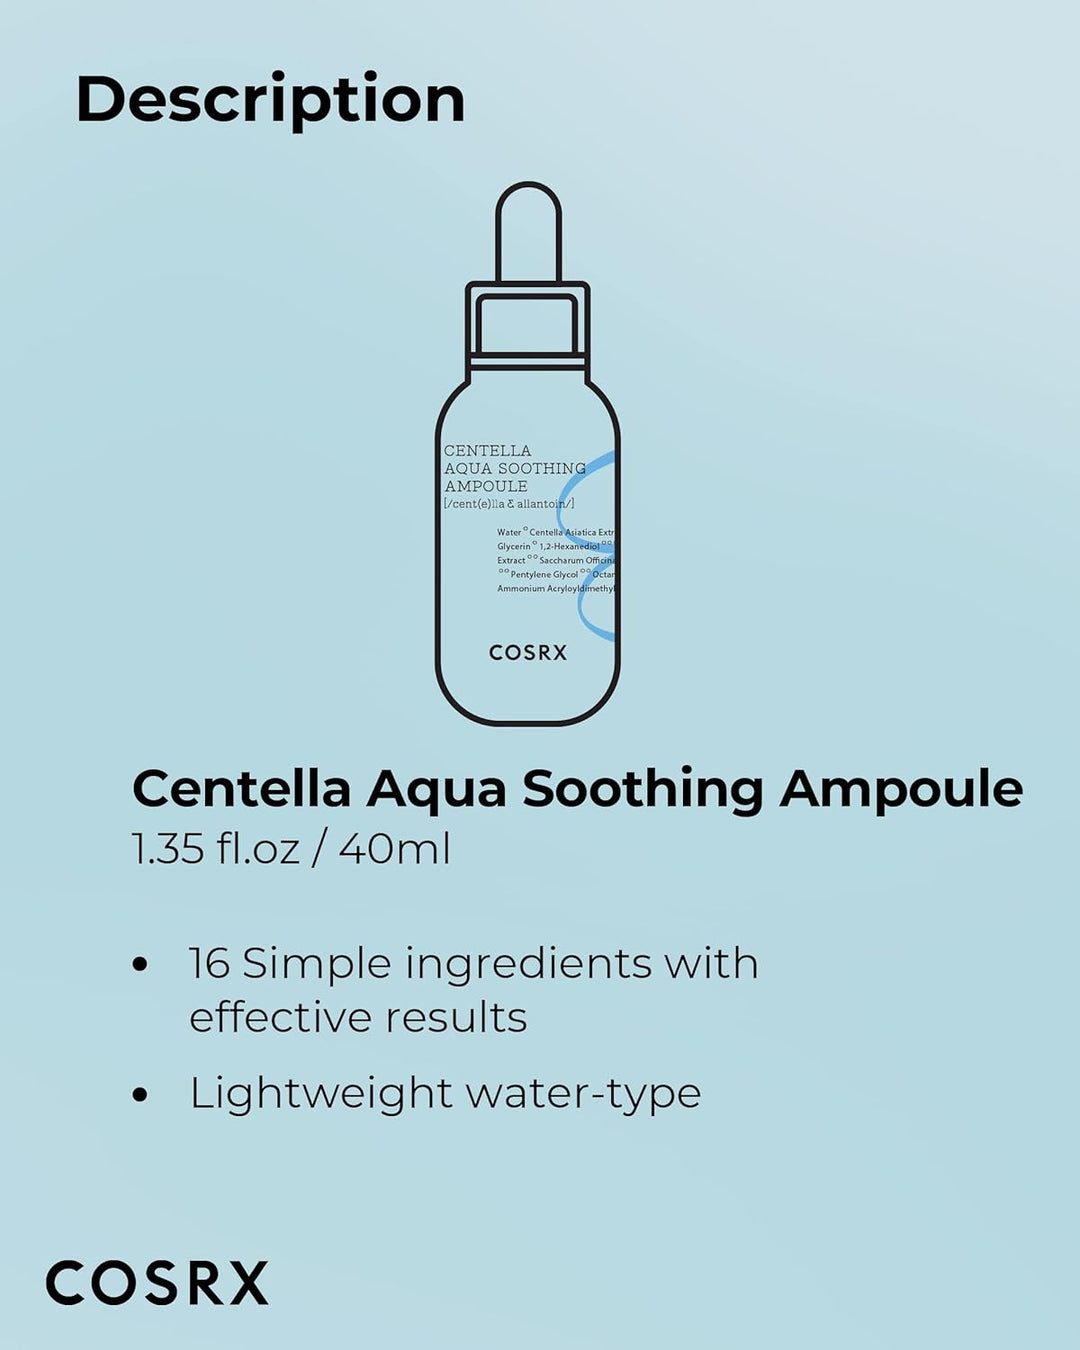 COSRX Centella Aqua Soothing Ampoule 40mlHealth & Beauty8809598450660